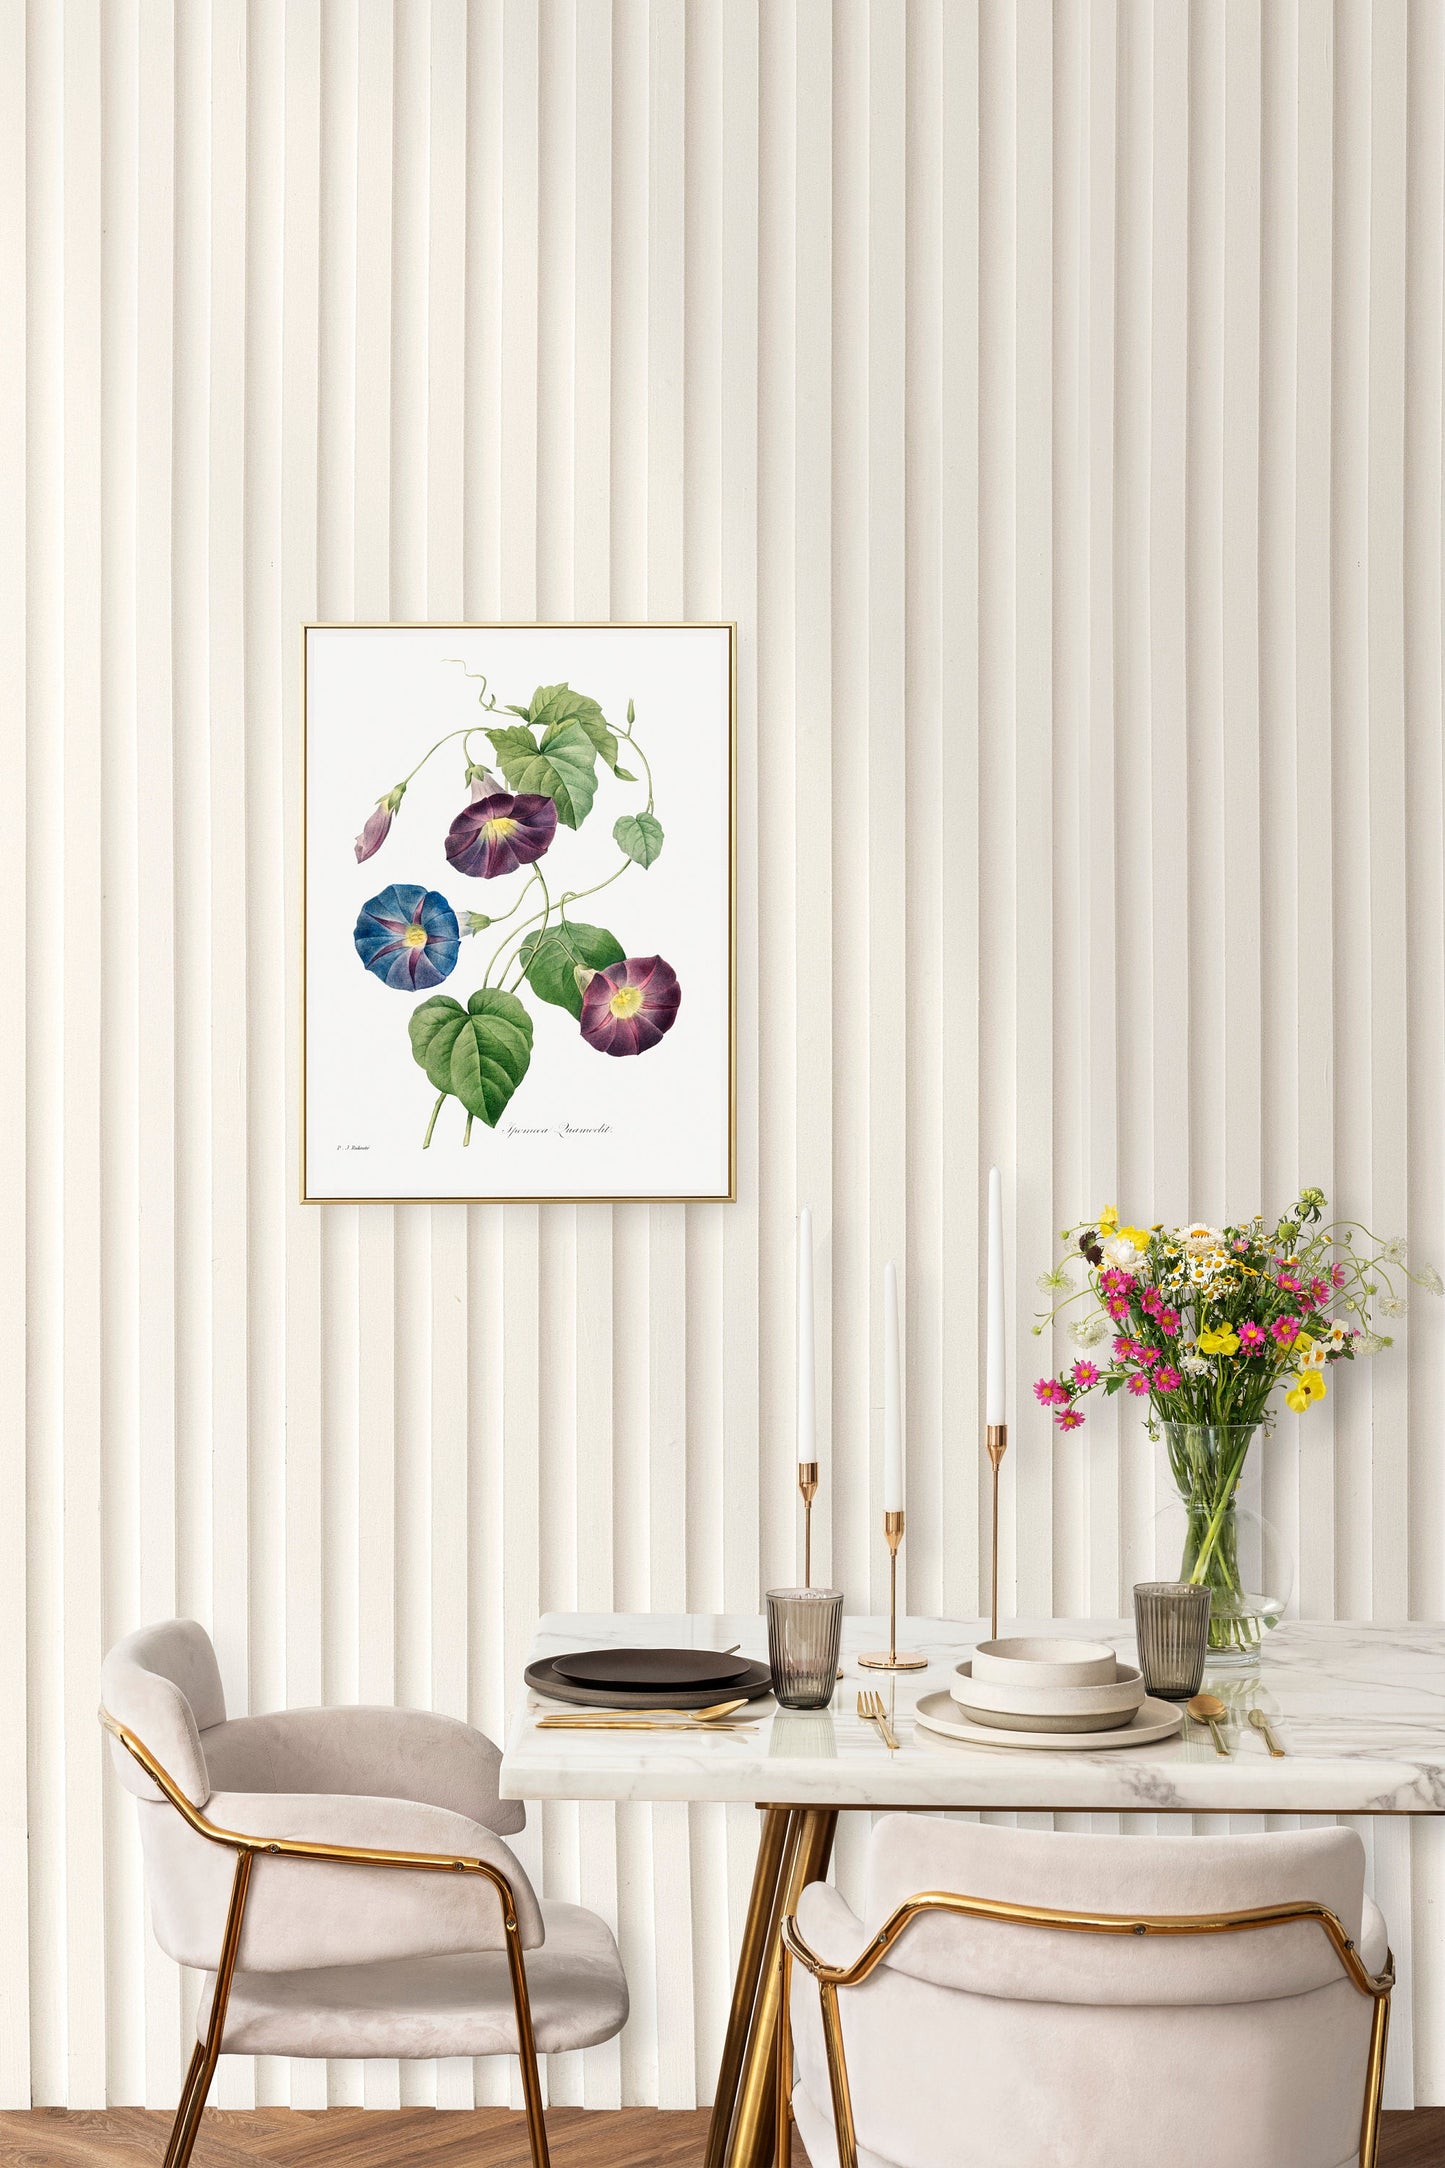 Auricula Flower Poster Illustration Print Wall Hanging Decor